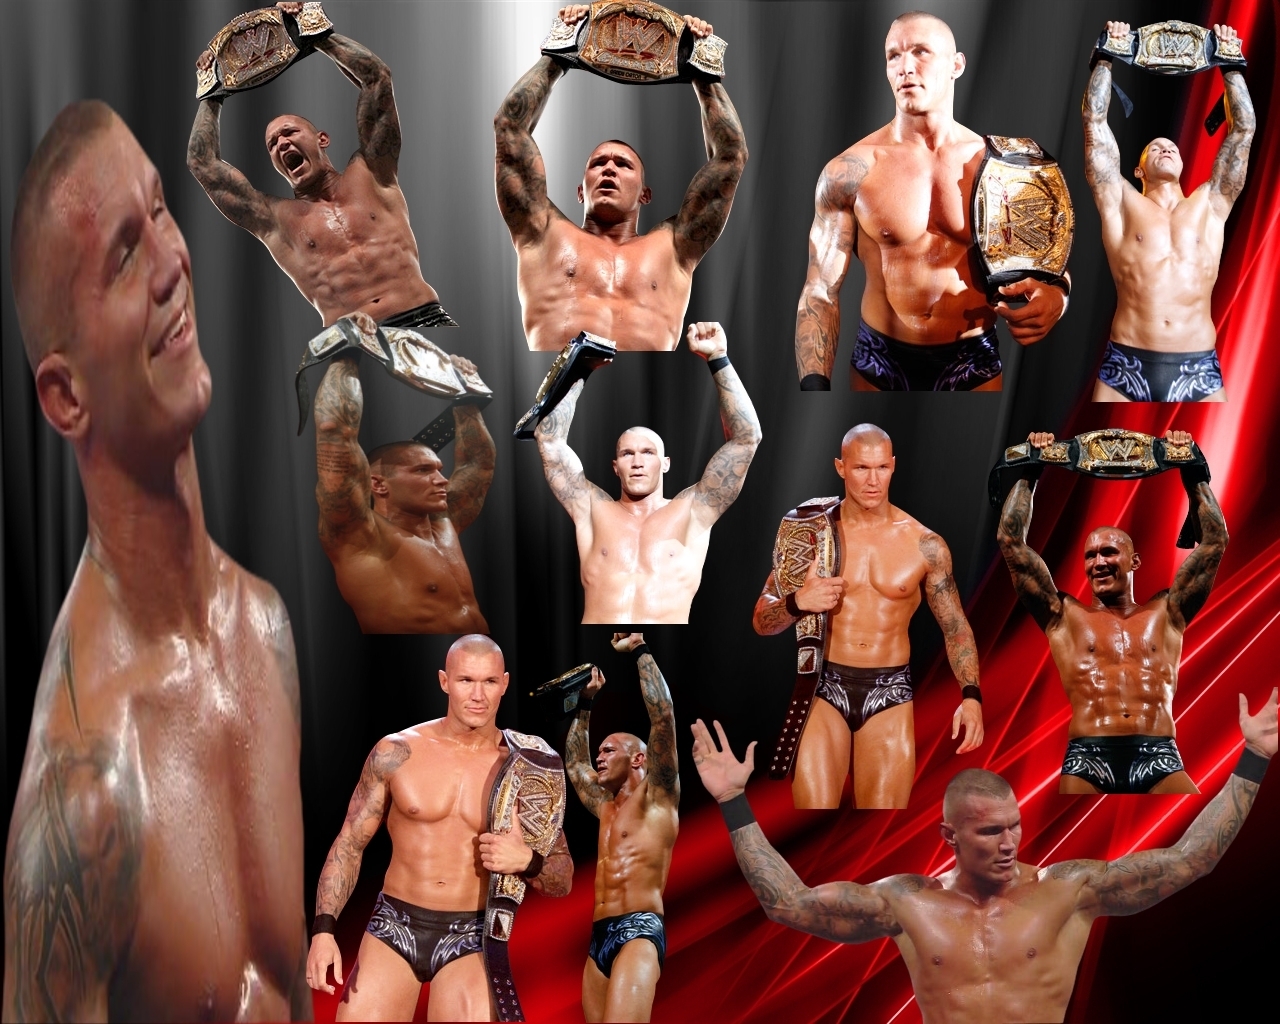 Orton New Wwe Champion - Randy Orton Wwe Champion 2010 - HD Wallpaper 